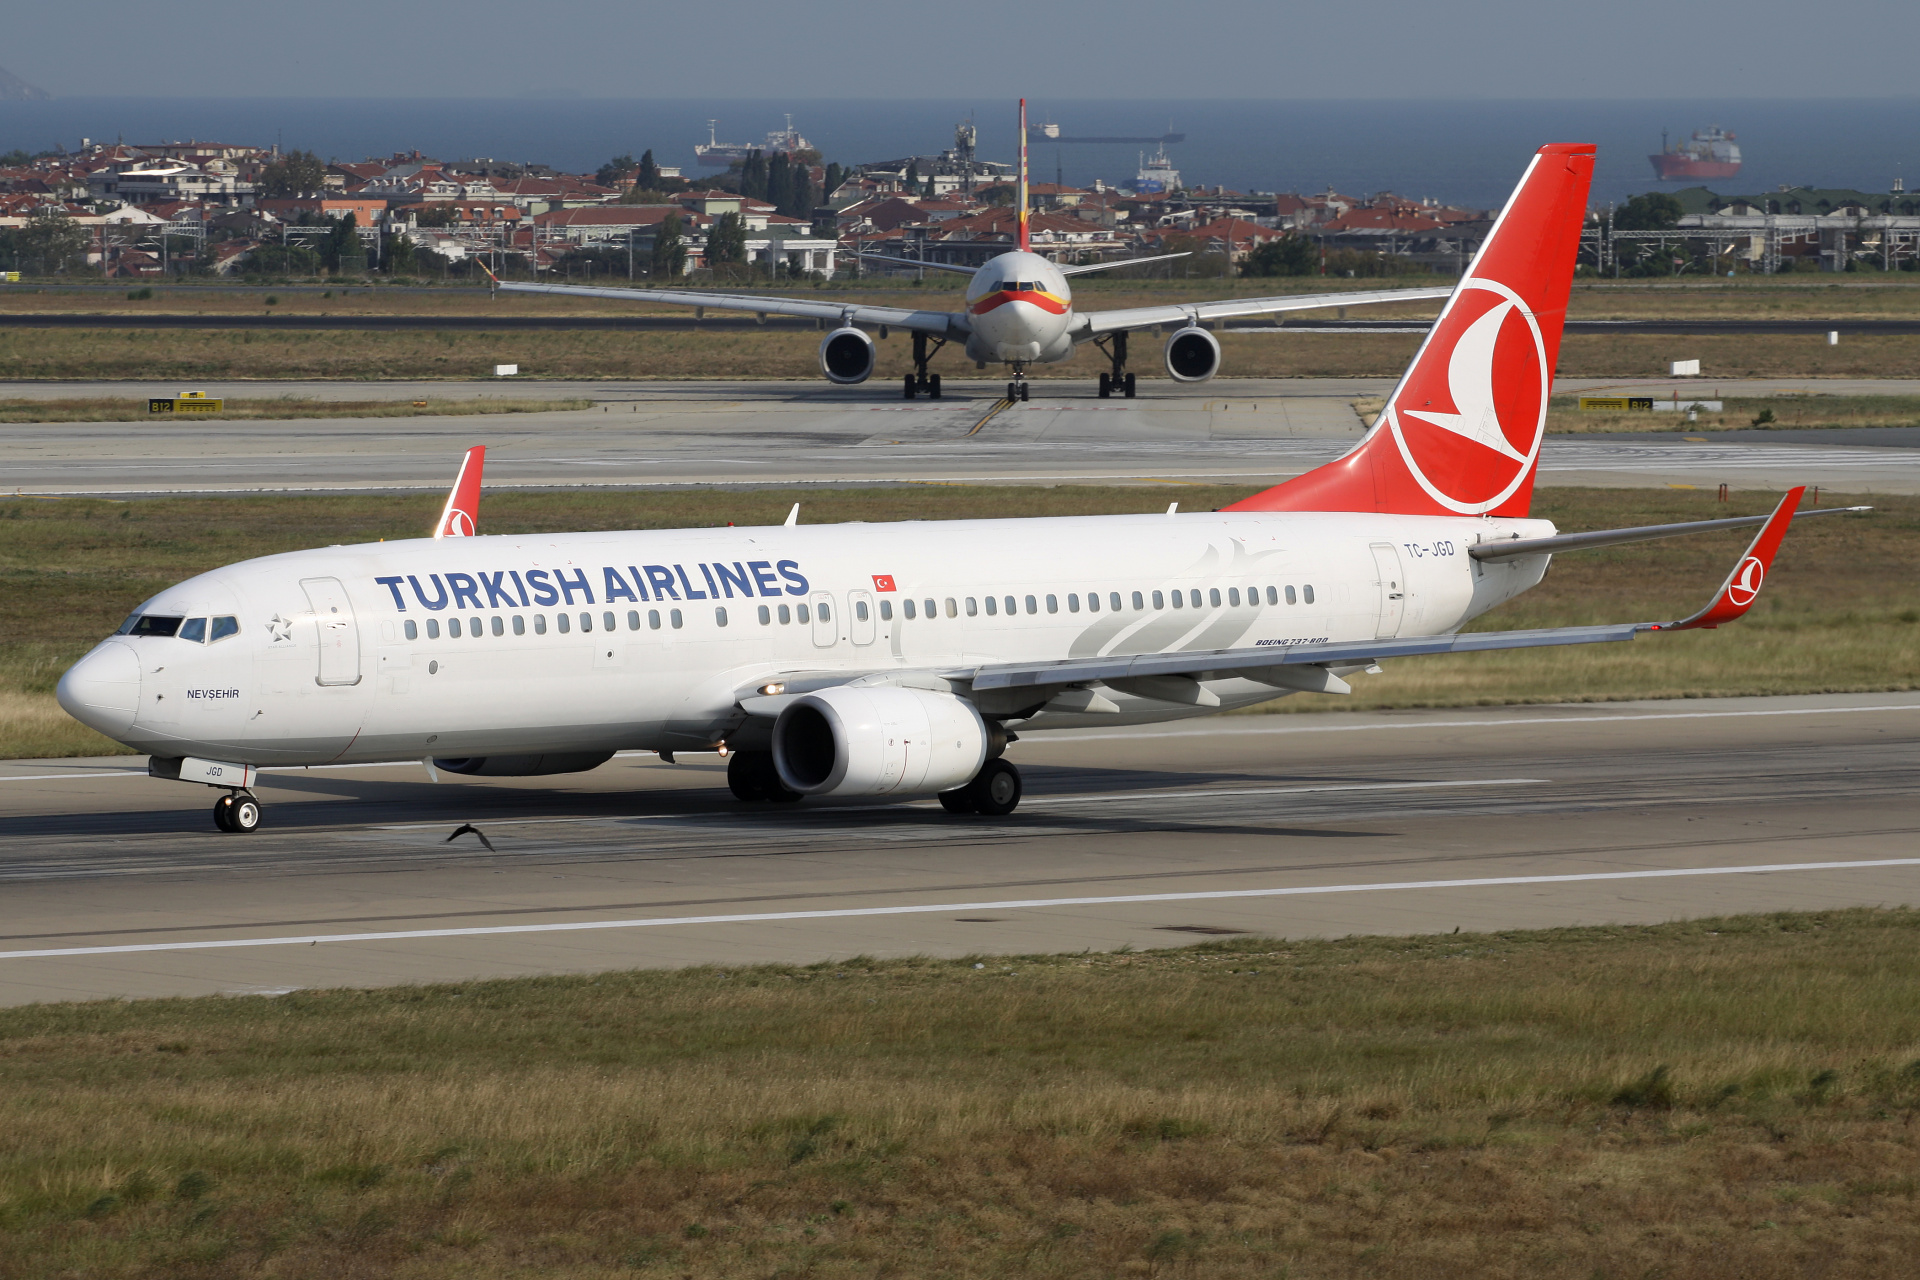 TC-JGD (Samoloty » Port Lotniczy im. Atatürka w Stambule » Boeing 737-800 » THY Turkish Airlines)